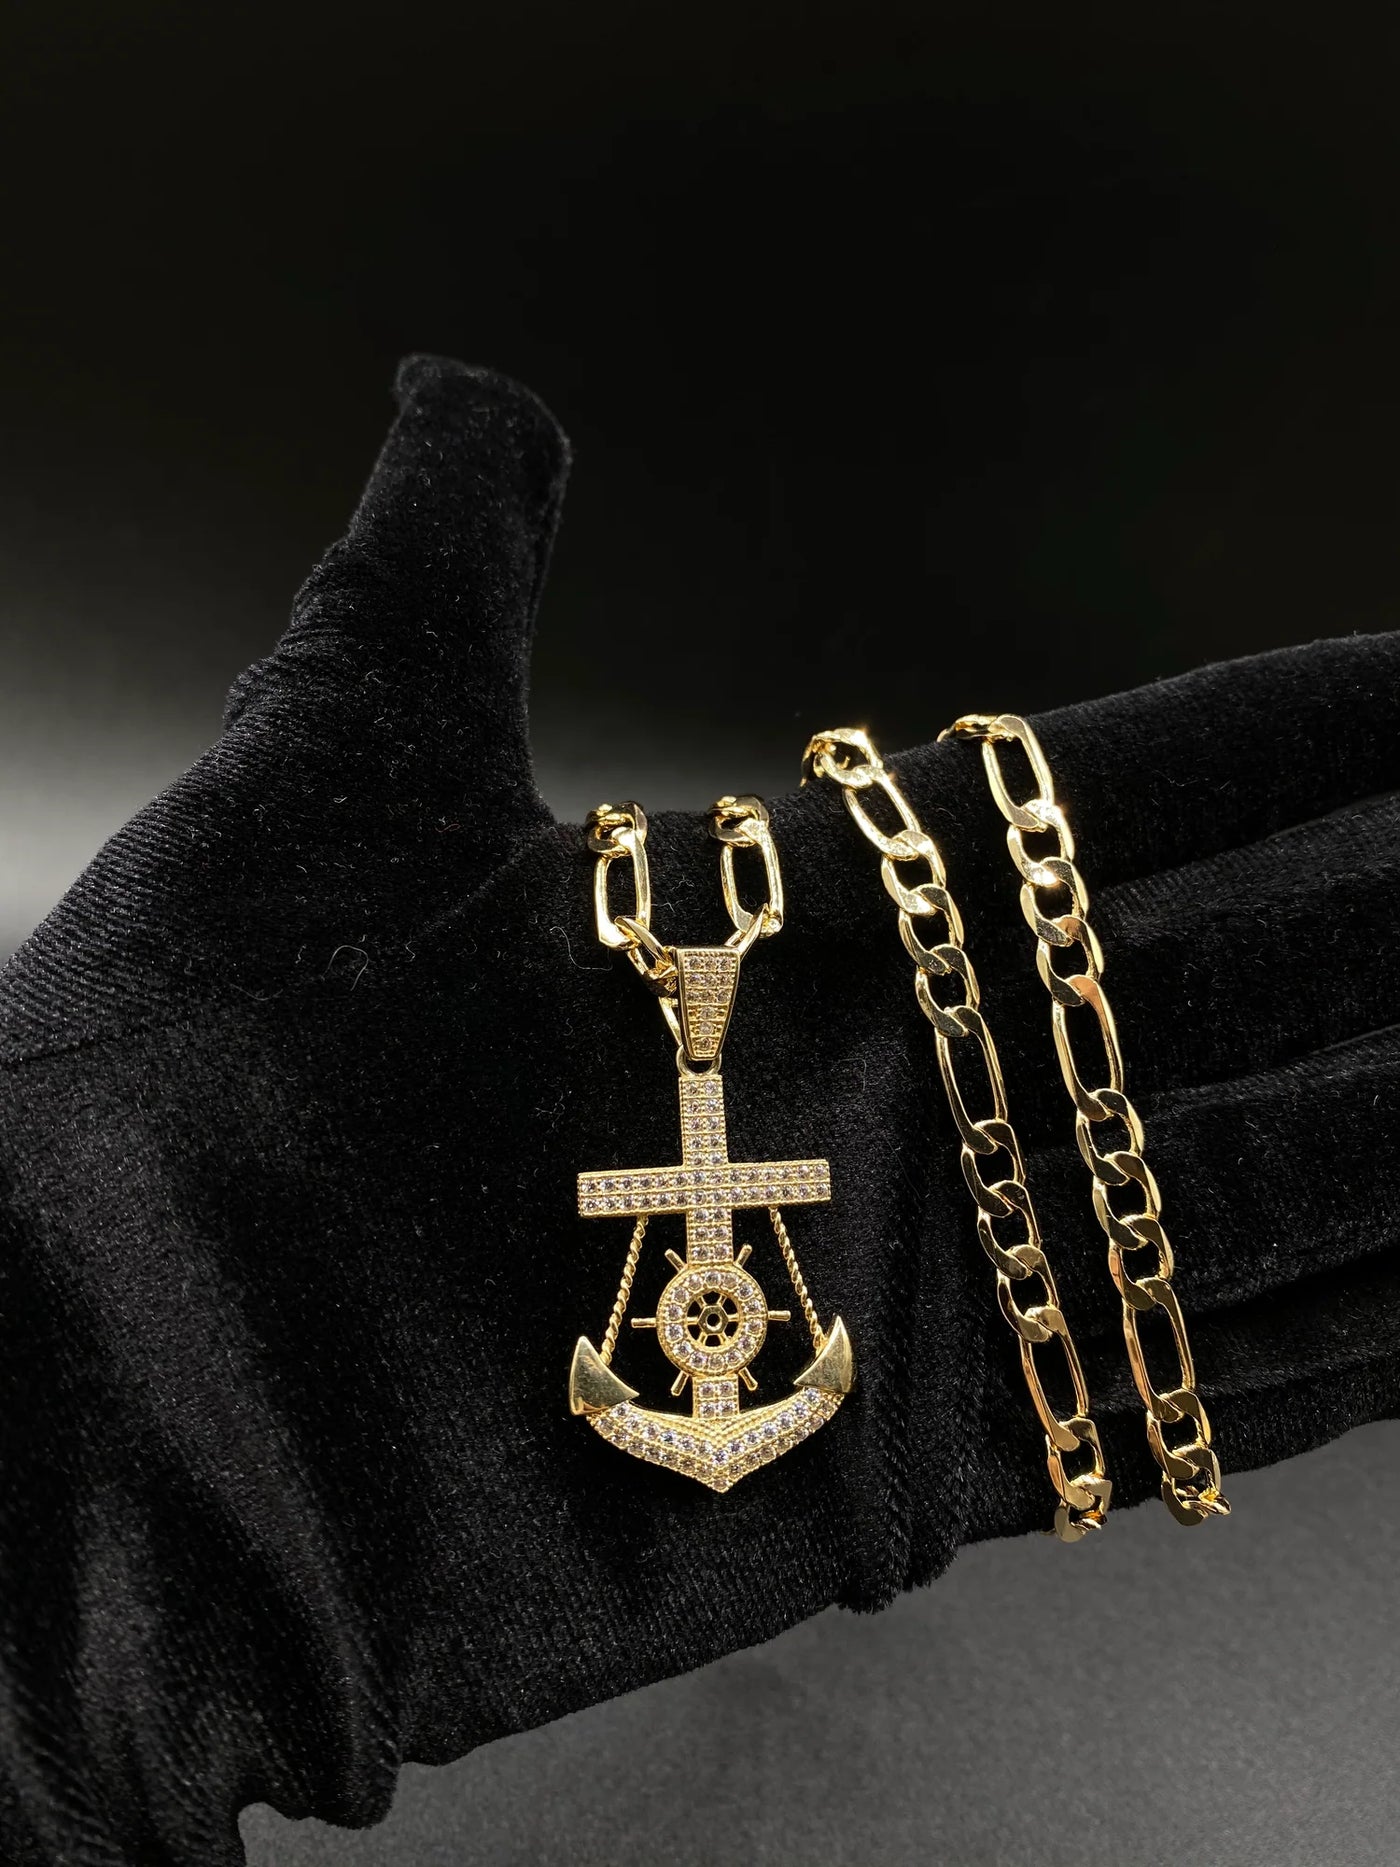 14k Gold Anchor Pendant or Chain set (BSP79)